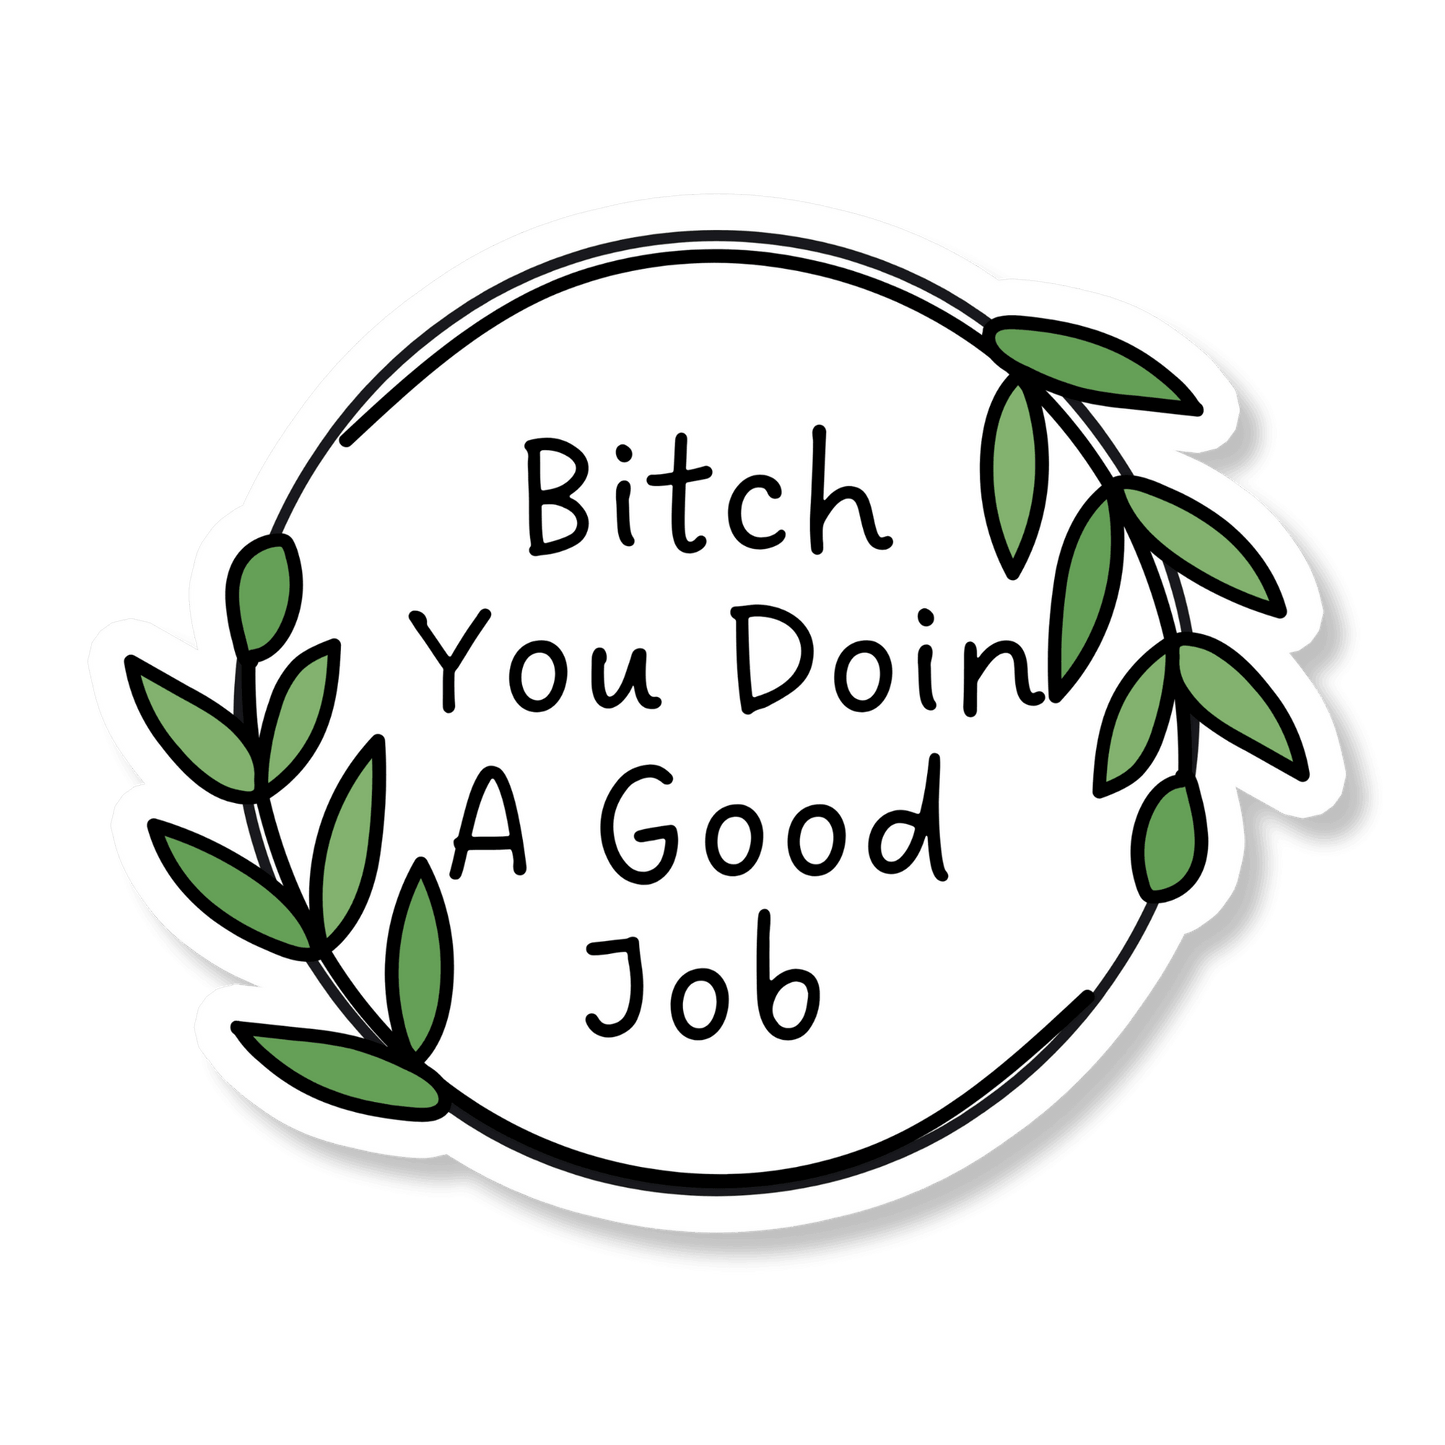 Bitch You Doin A Good Job Meme Sticker - Sticker Bull white and green sticker mental health meme sticker